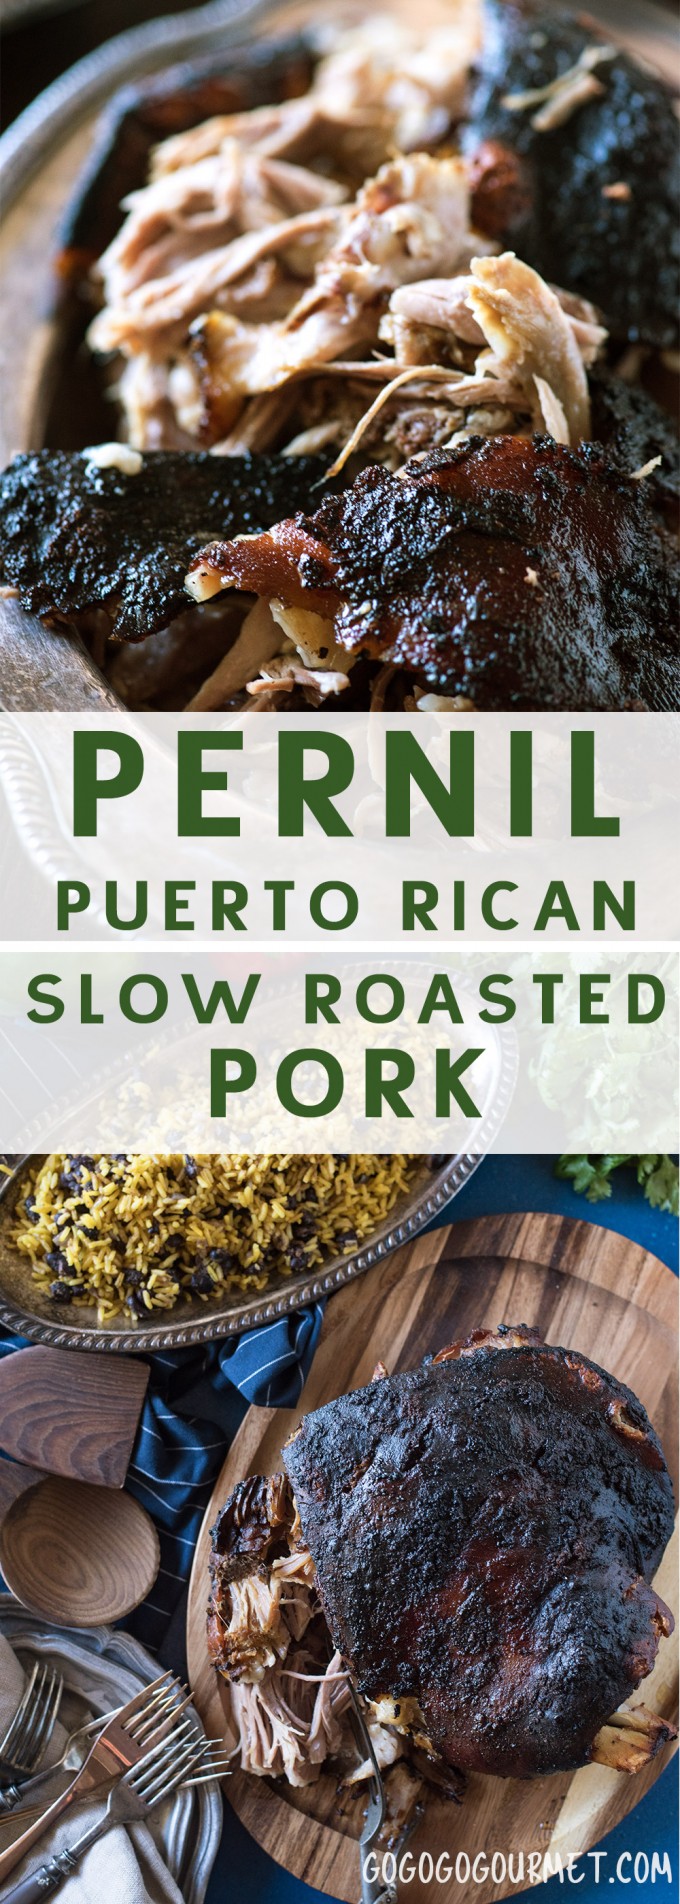 Pernil, Puerto Rican Slow Roasted Pork- tender, meltingly tender pork with amazingly crispy skin. It's delicious and so addictive! #gogogogourmet #pernil #puertoricanpork via @gogogogourmet